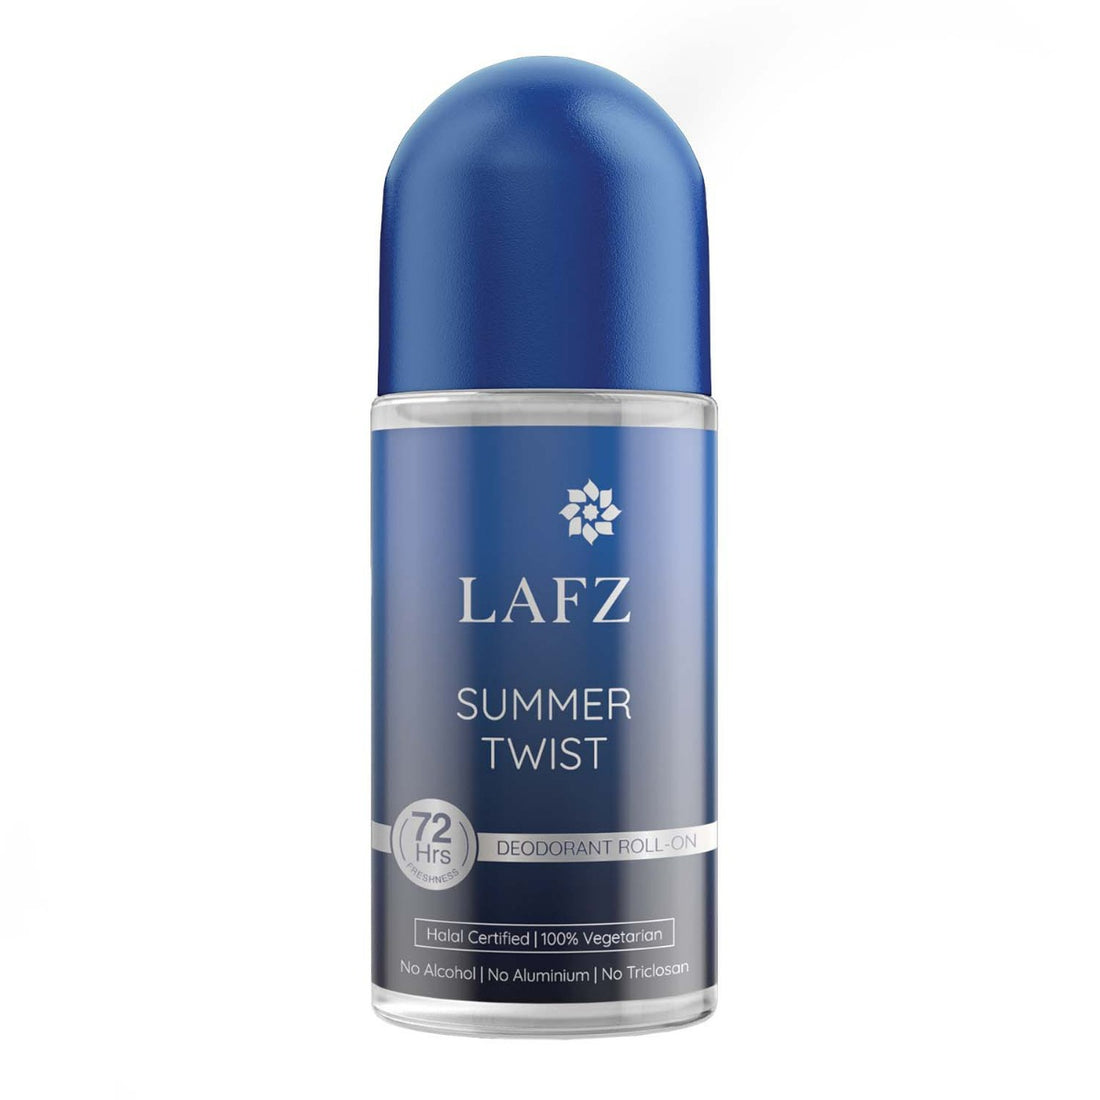 LAFZ No Alcohol Roll On Deodorant Summer Twist for Men (50ml)